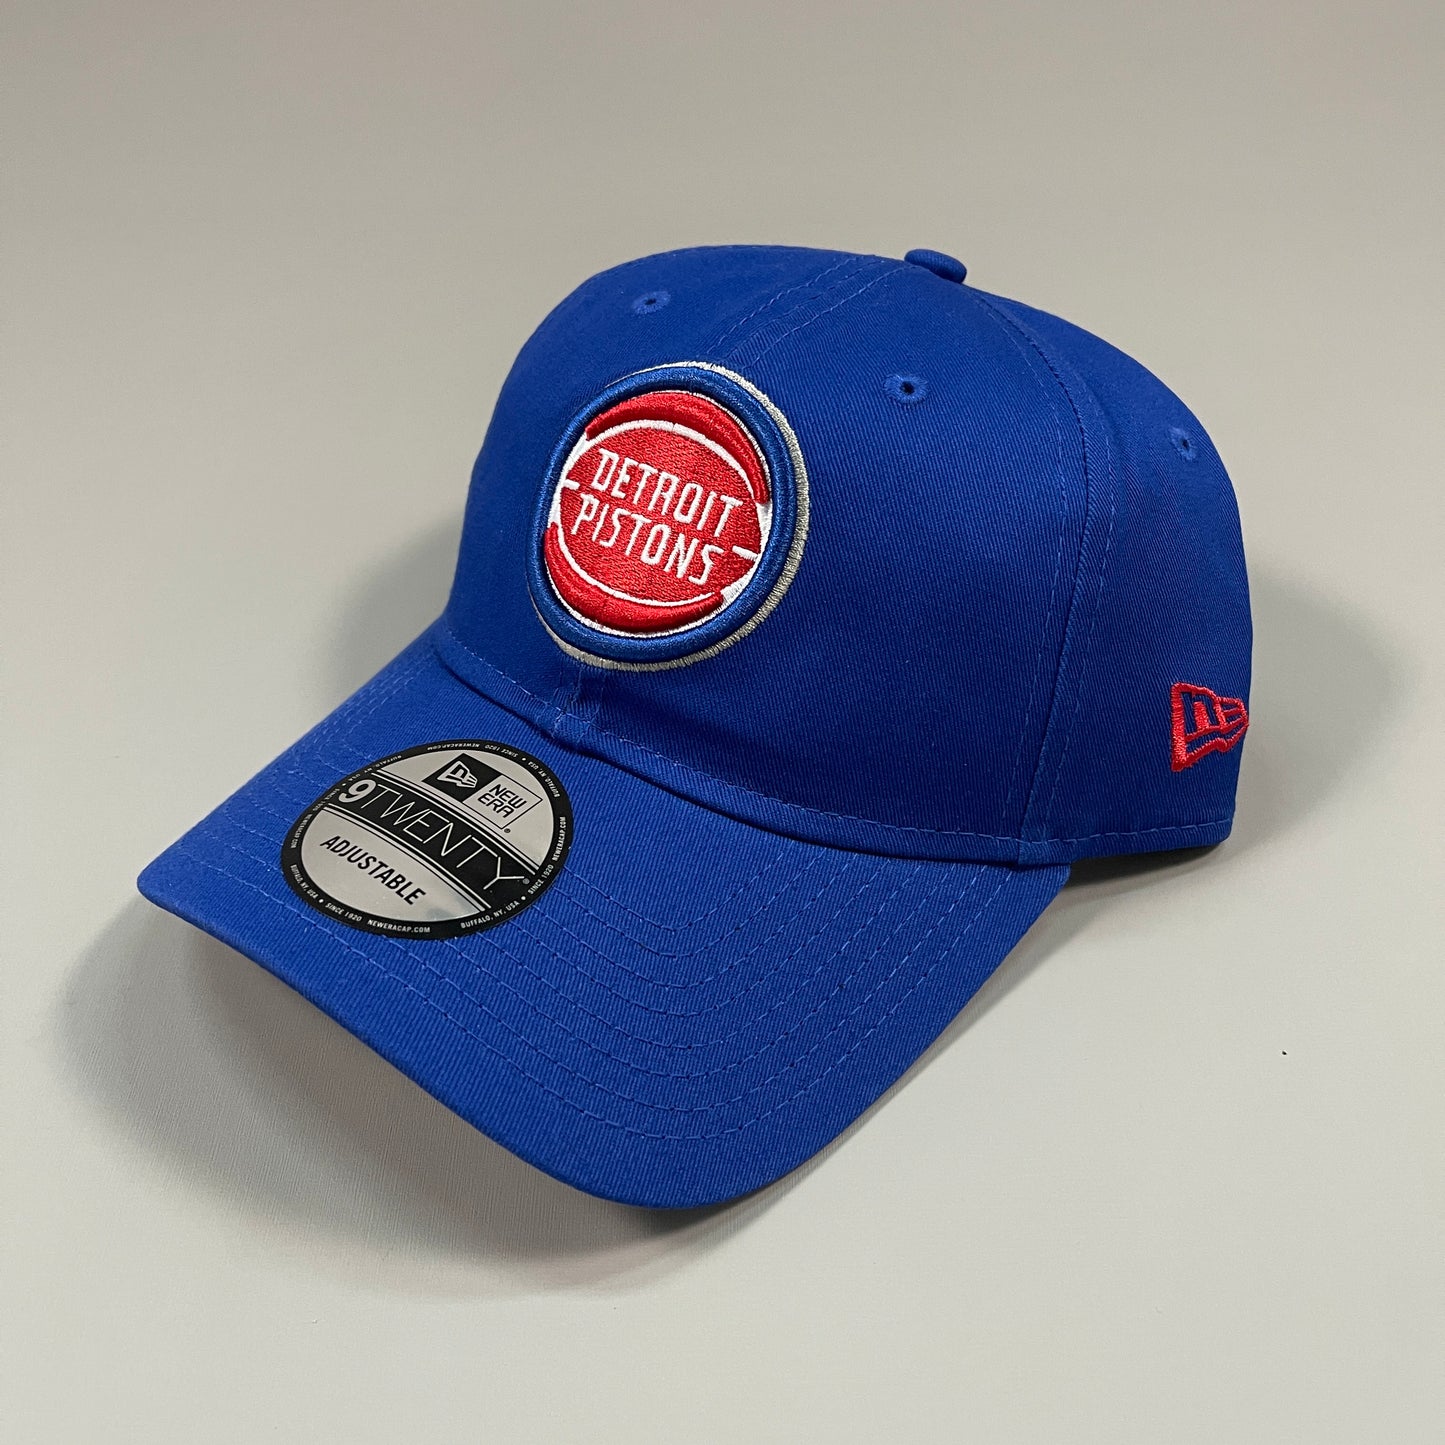 DETROIT PISTONS (NEW ERA) 9Twenty NBA Adjustable Strapback Hat Cap Blue (New)